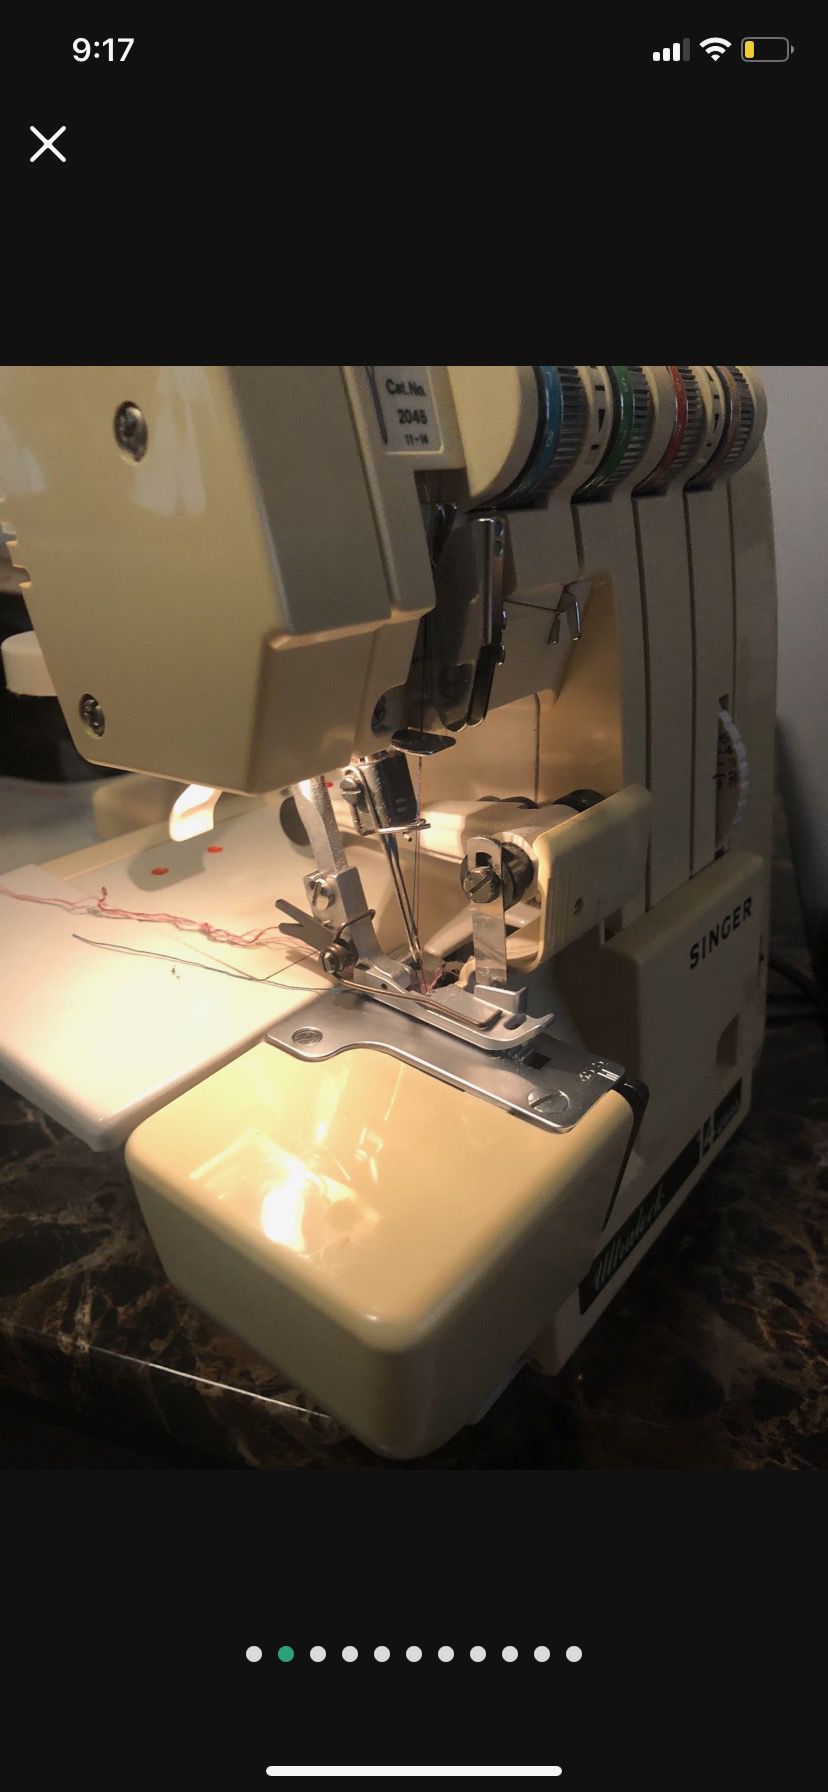 Singer Ultralock 14U234 Serger Sewing Machine